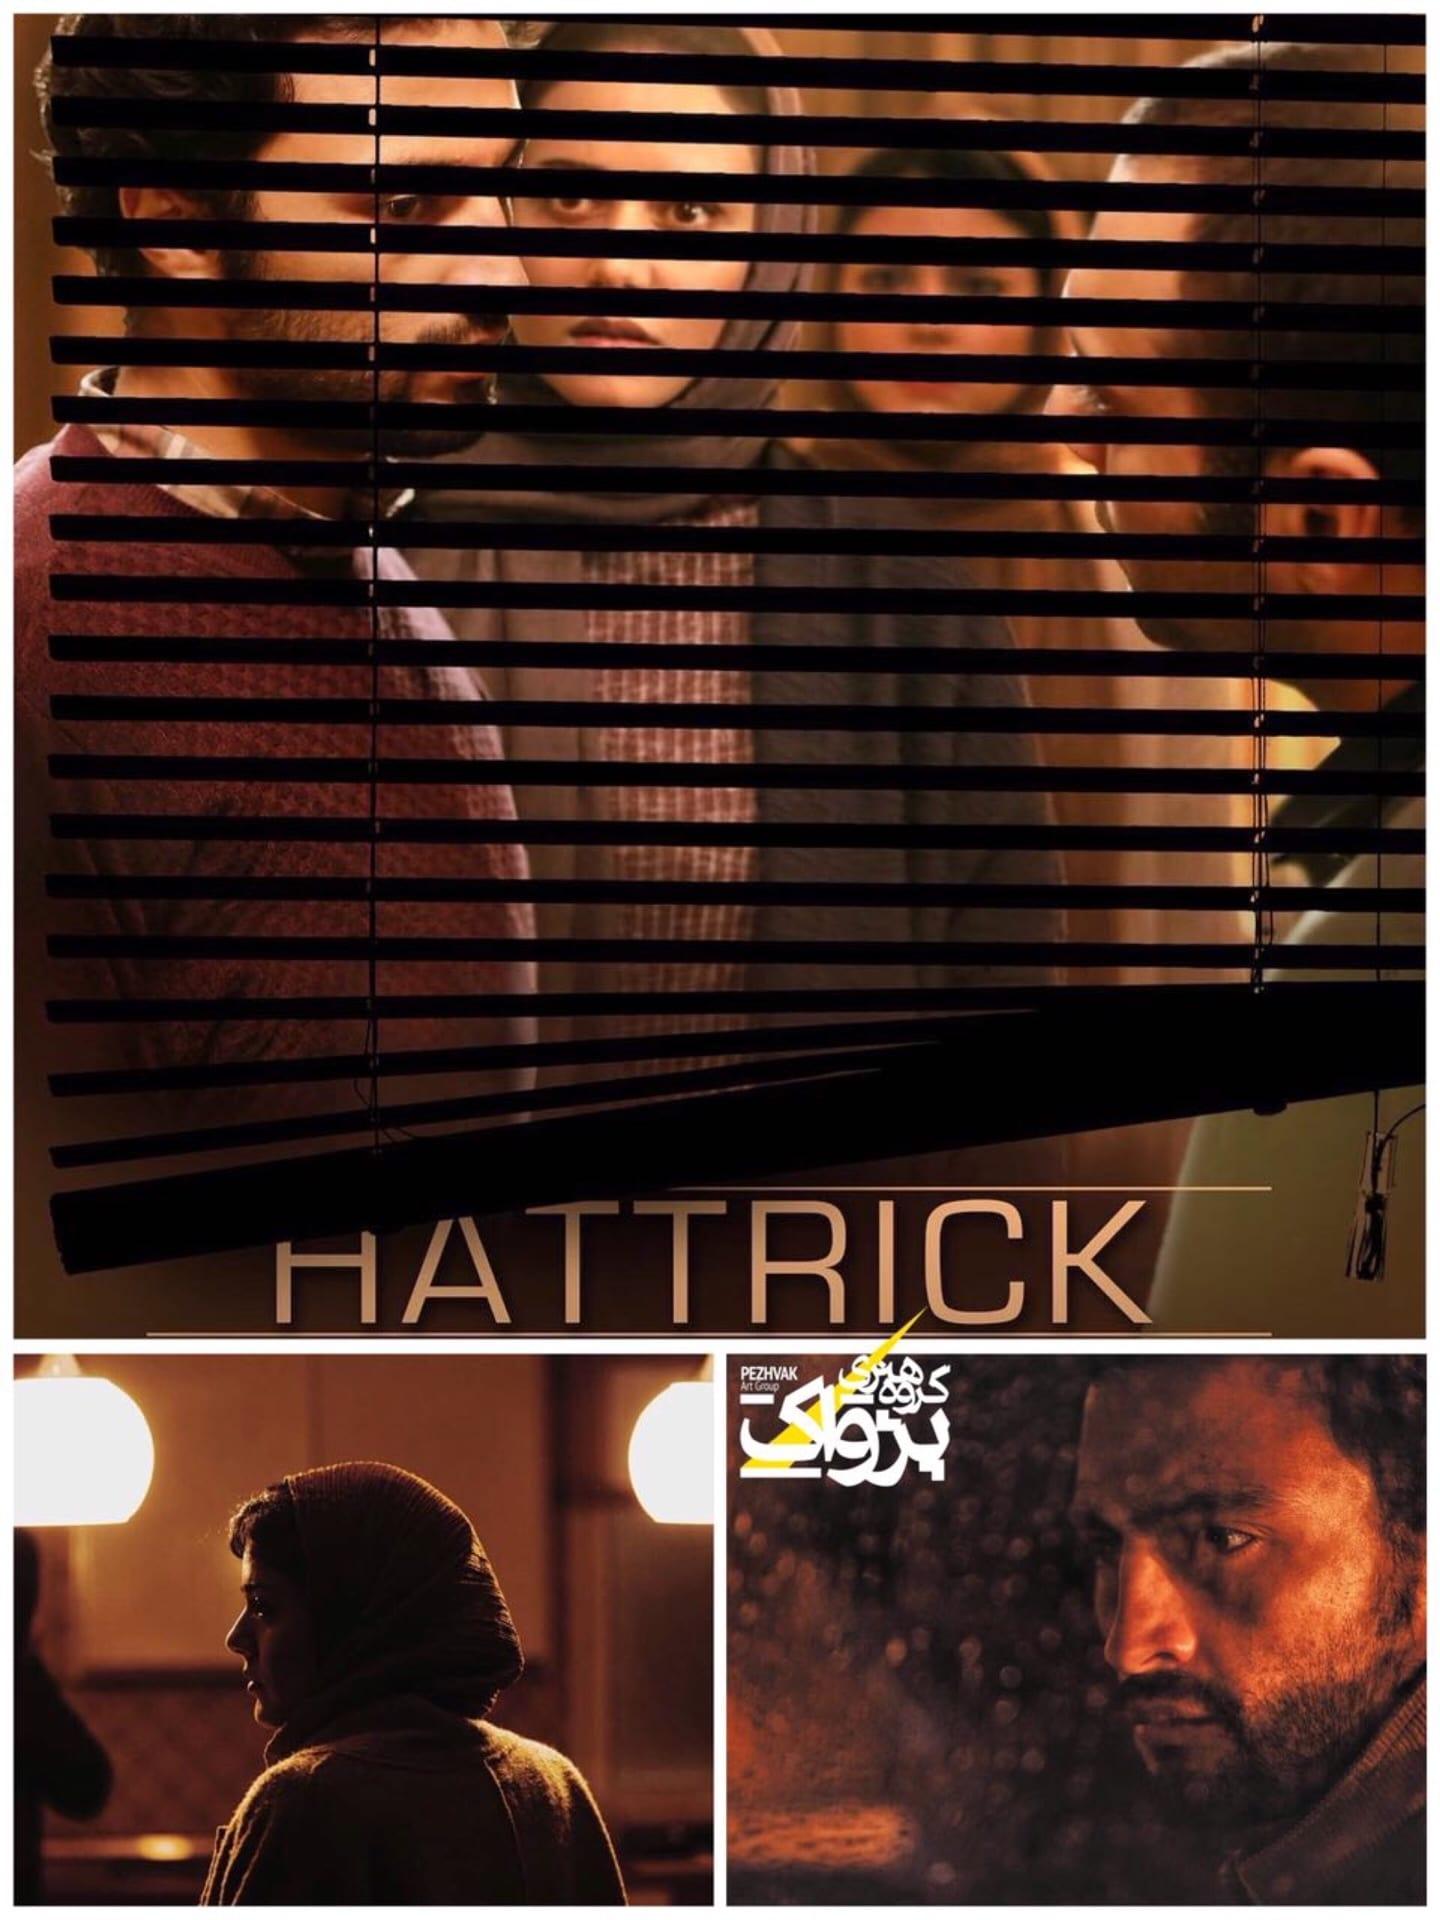 Hattrick poster